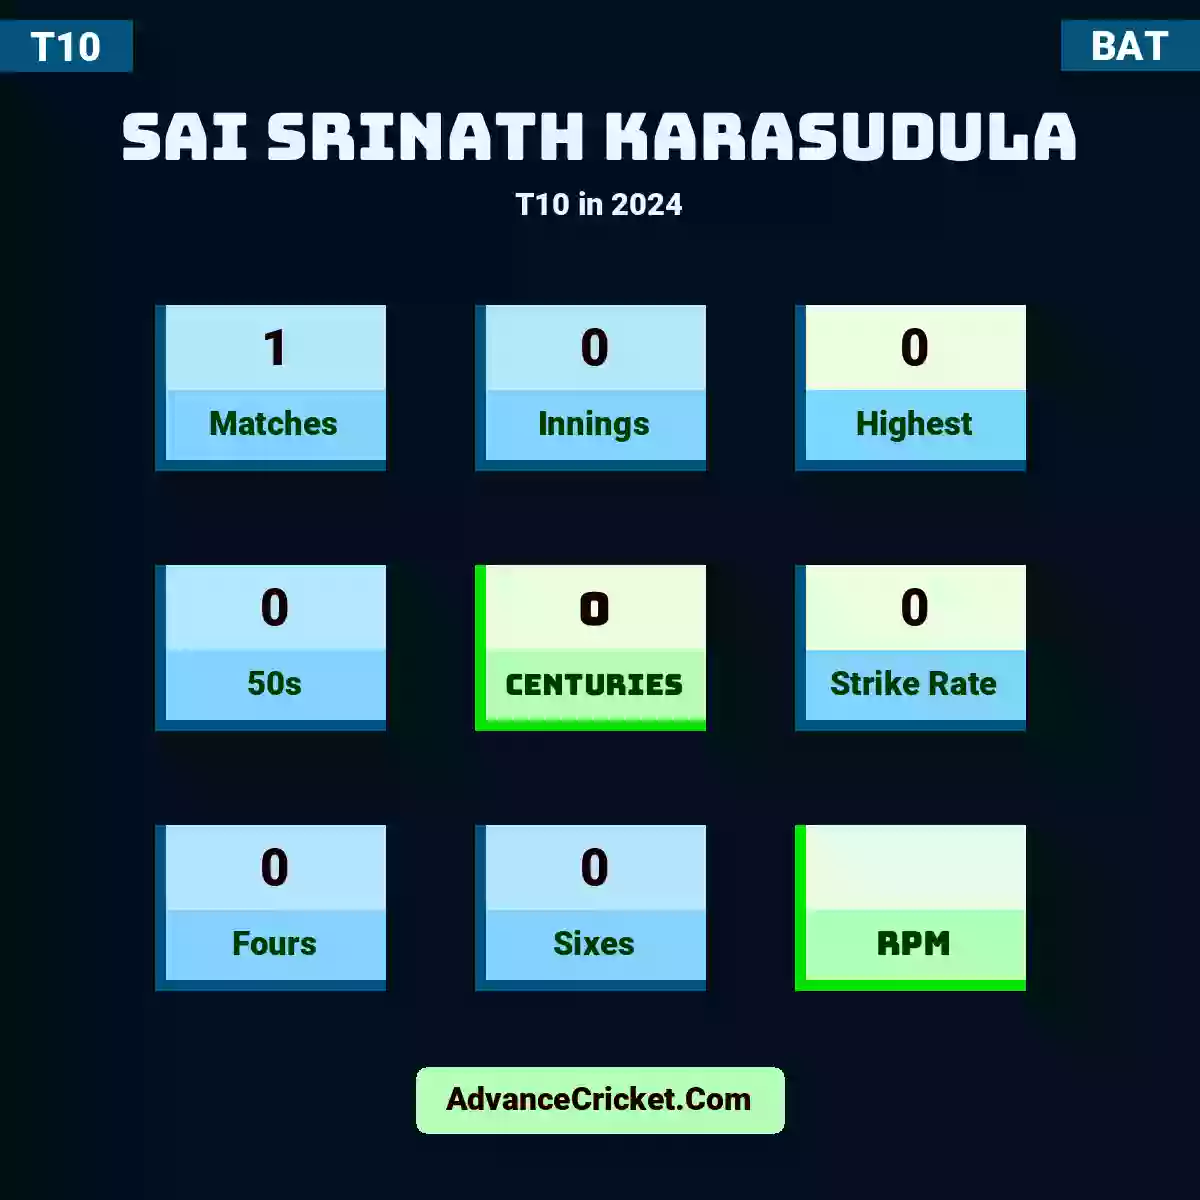 Sai Srinath Karasudula T10  in 2024, Sai Srinath Karasudula played 1 matches, scored 0 runs as highest, 0 half-centuries, and 0 centuries, with a strike rate of 0. S.Srinath.Karasudula hit 0 fours and 0 sixes.